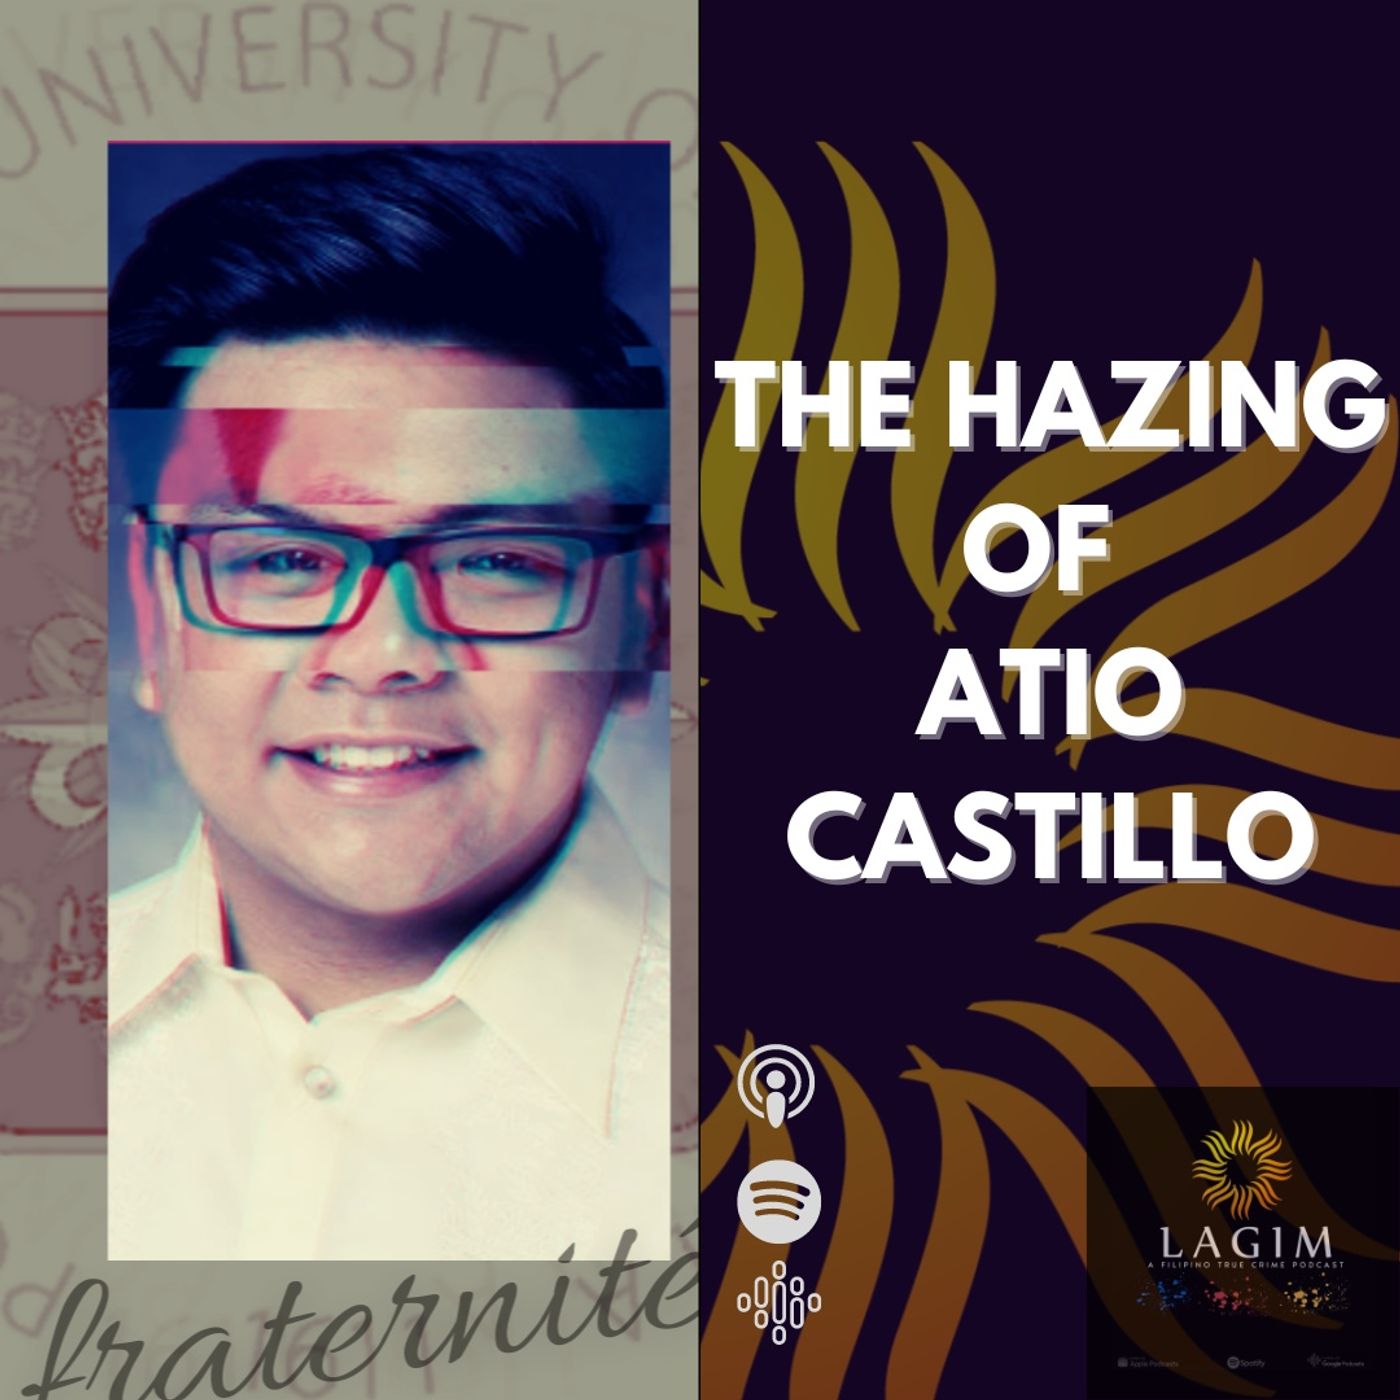 The Hazing of Atio Castillo